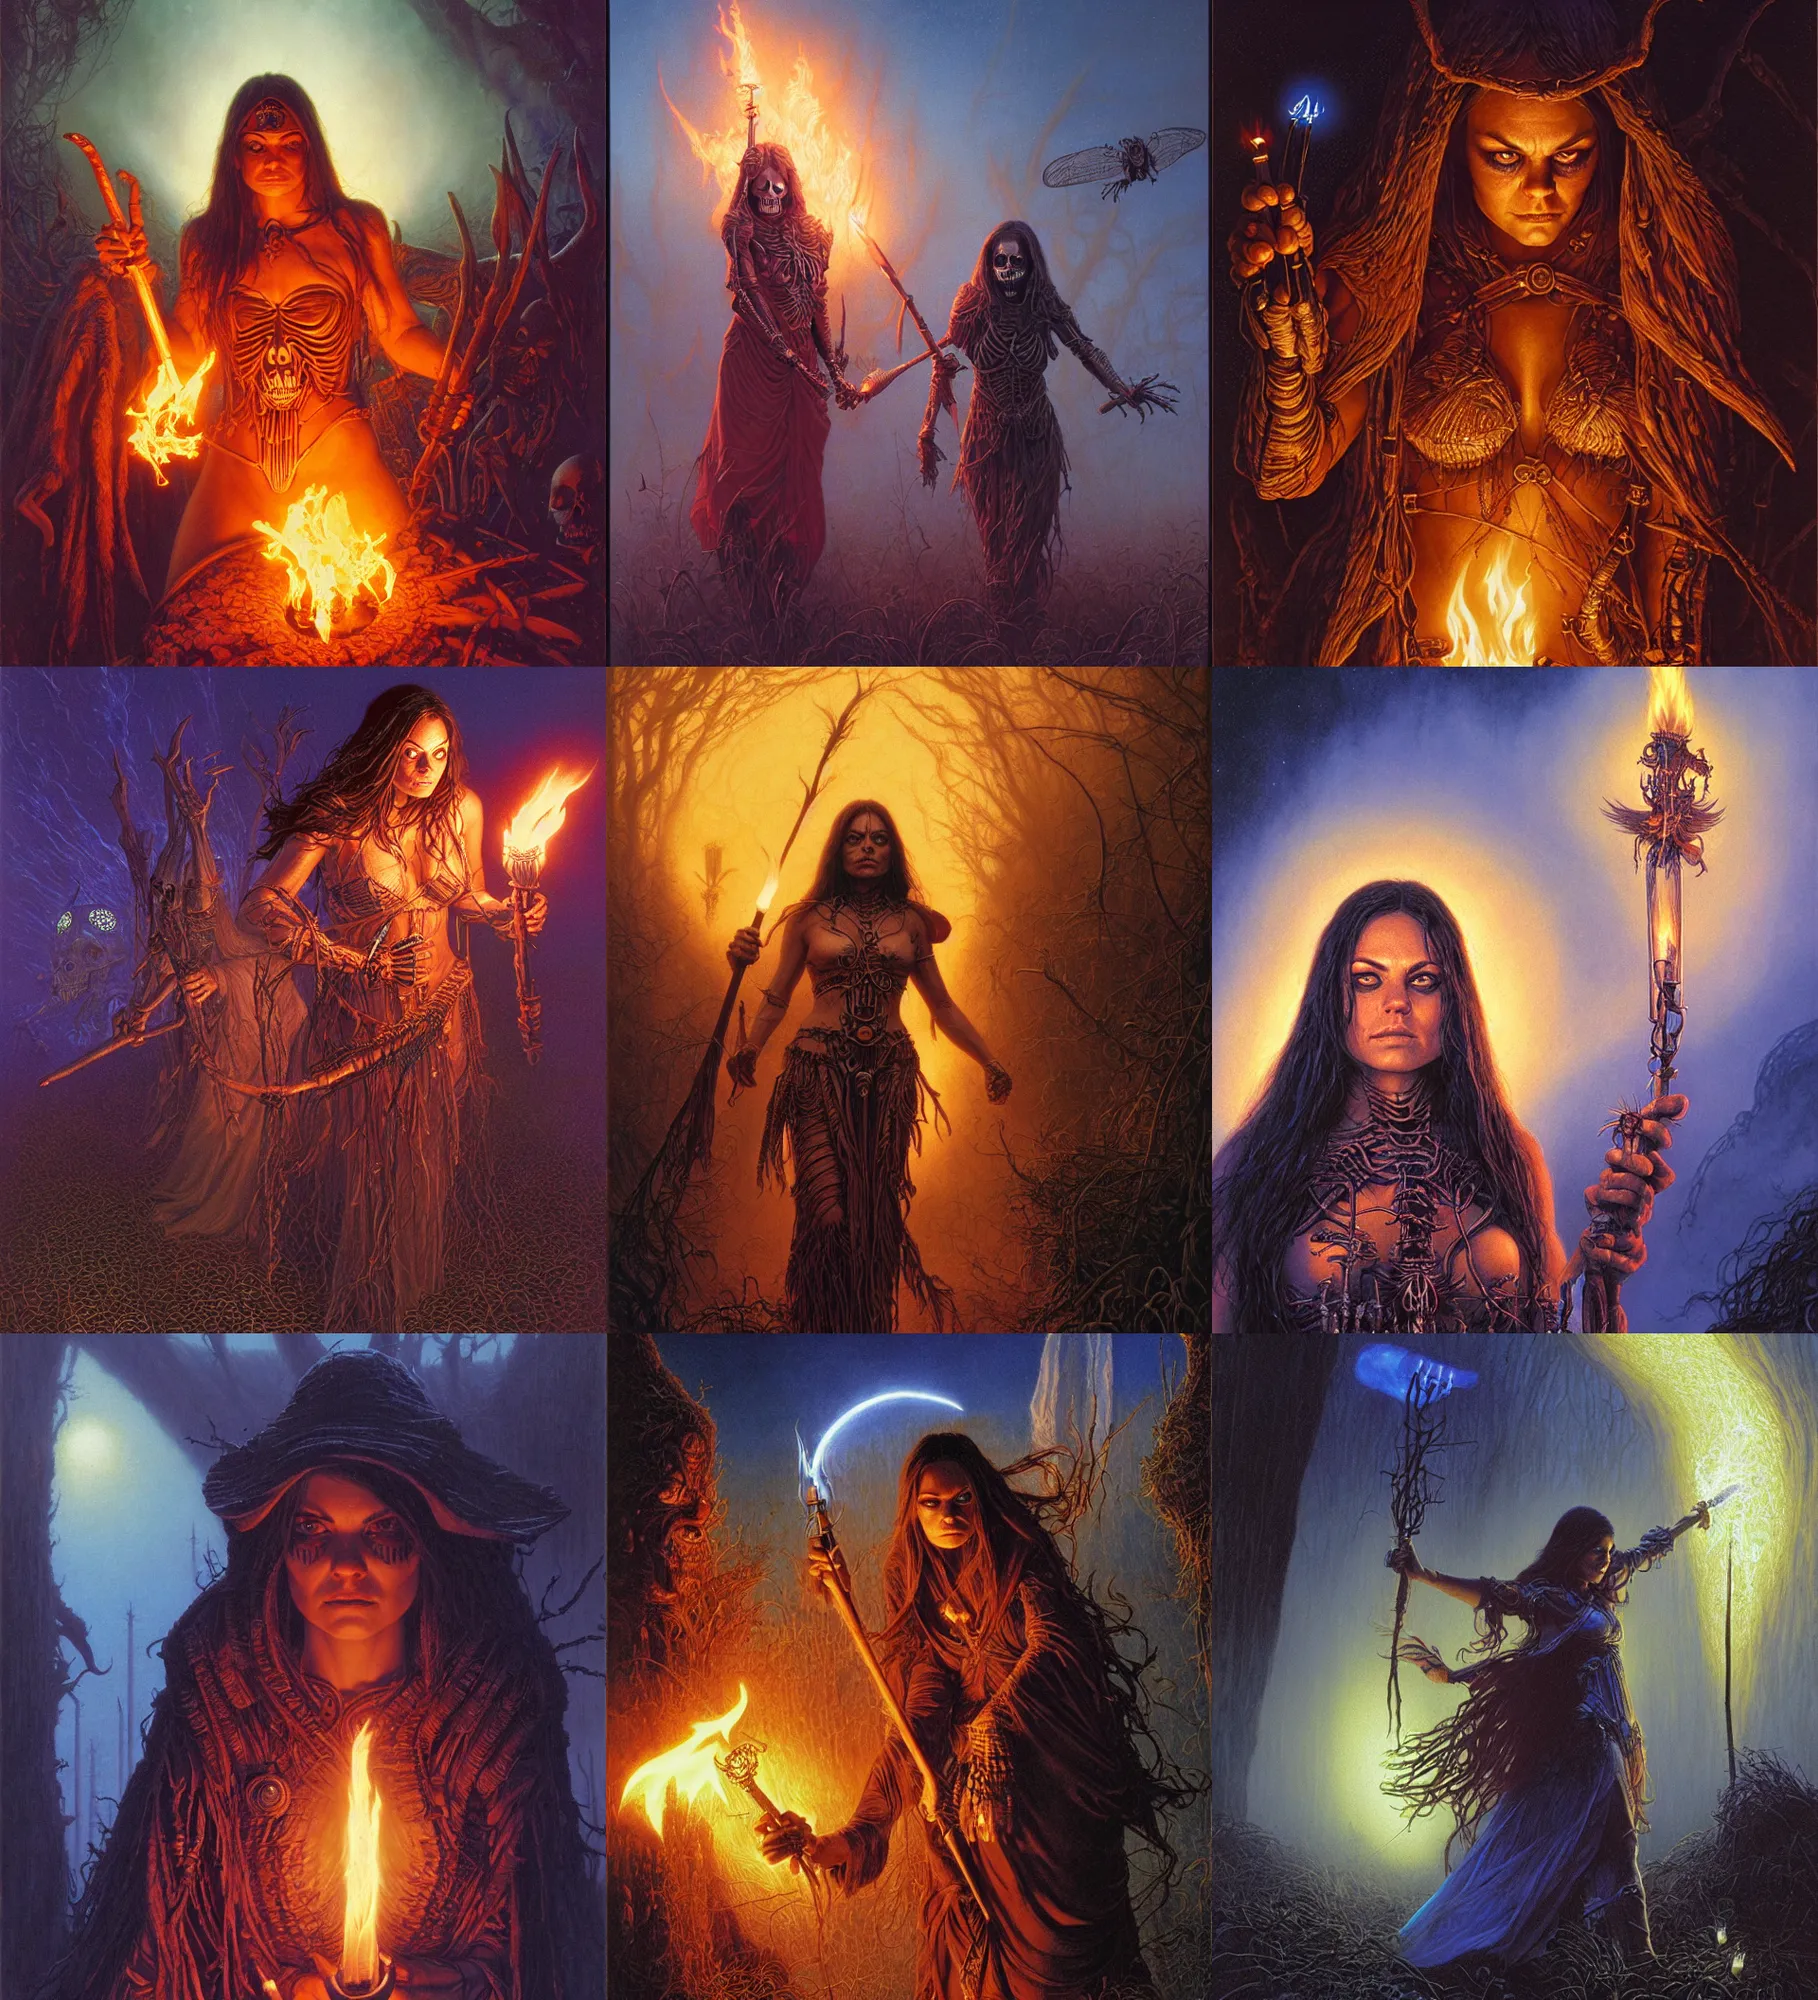 Prompt: priestess sorceress mila kunis action close - up portrait as skeletons approach, fog, fireflies, torch light, donato giancola, tim hildebrandt, wayne barlow, bruce pennington, larry elmore